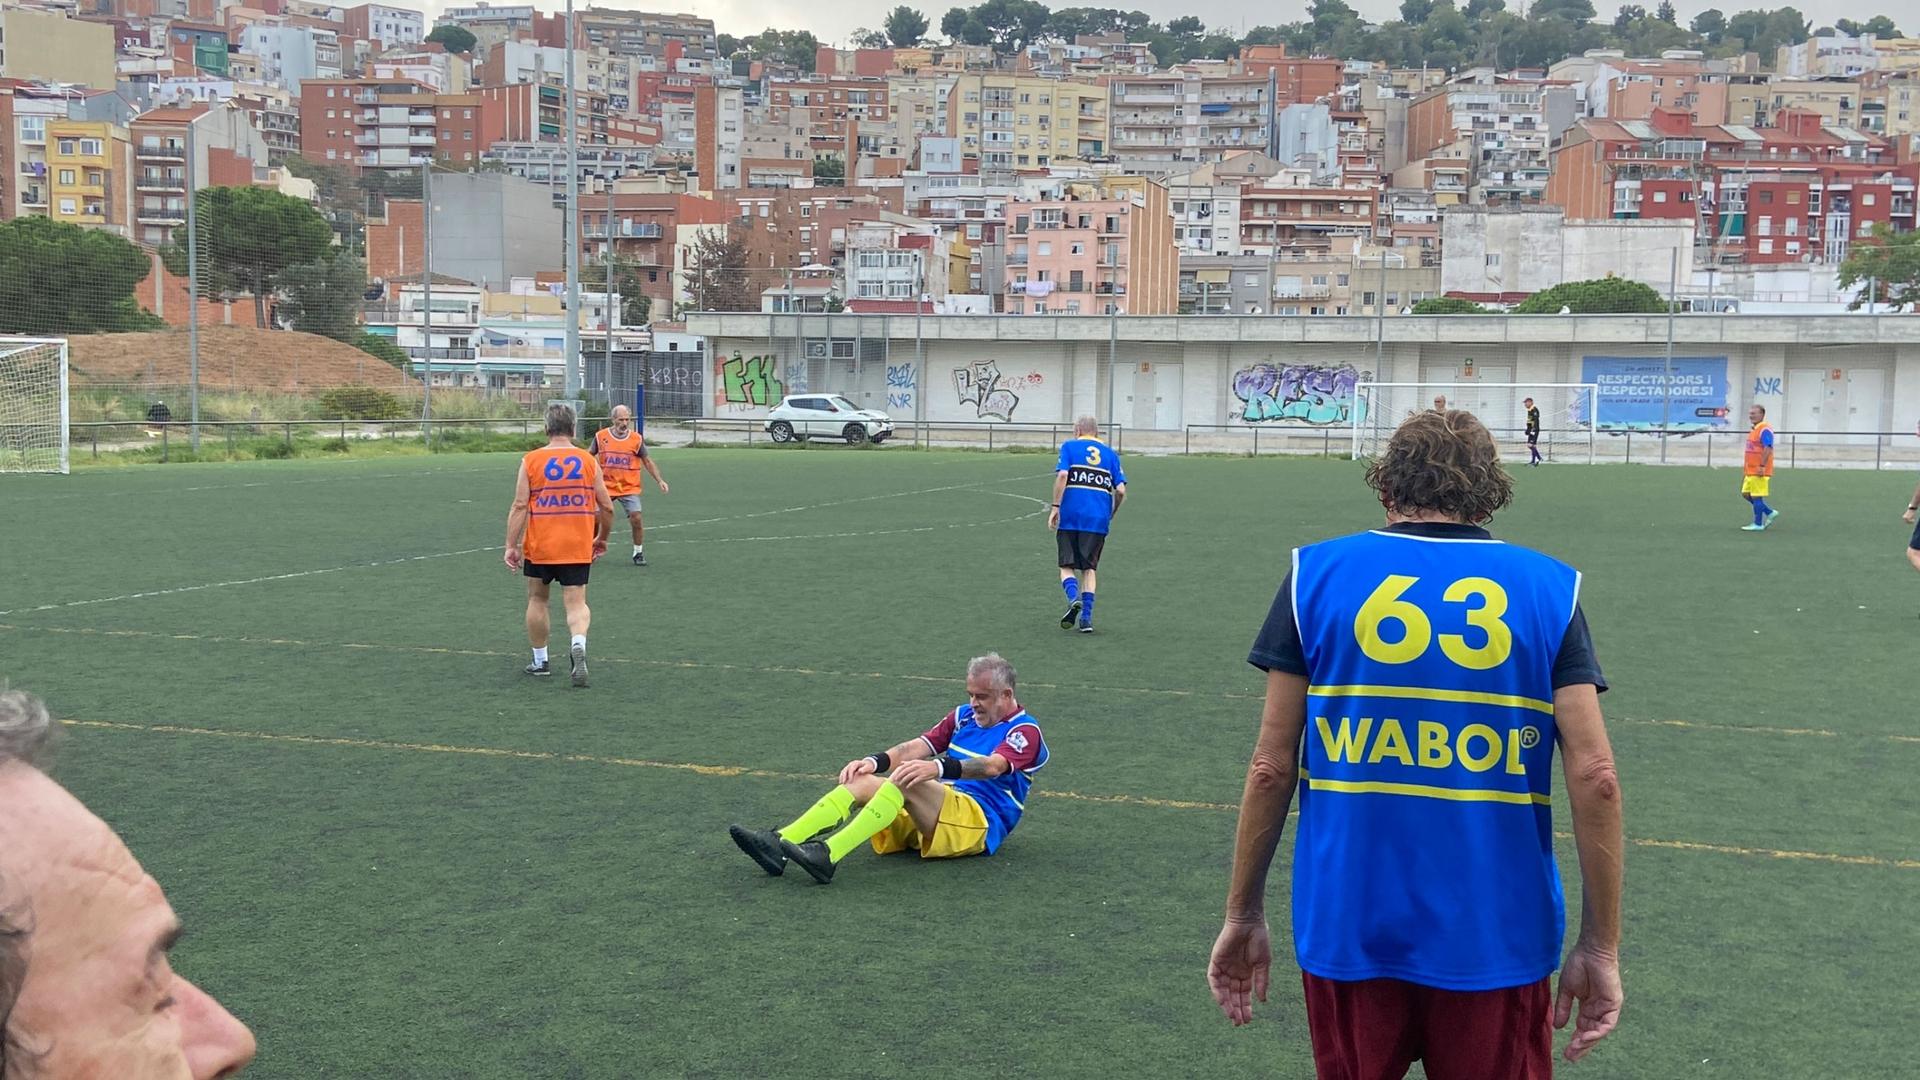 Wabol Spain soccer players on the field.